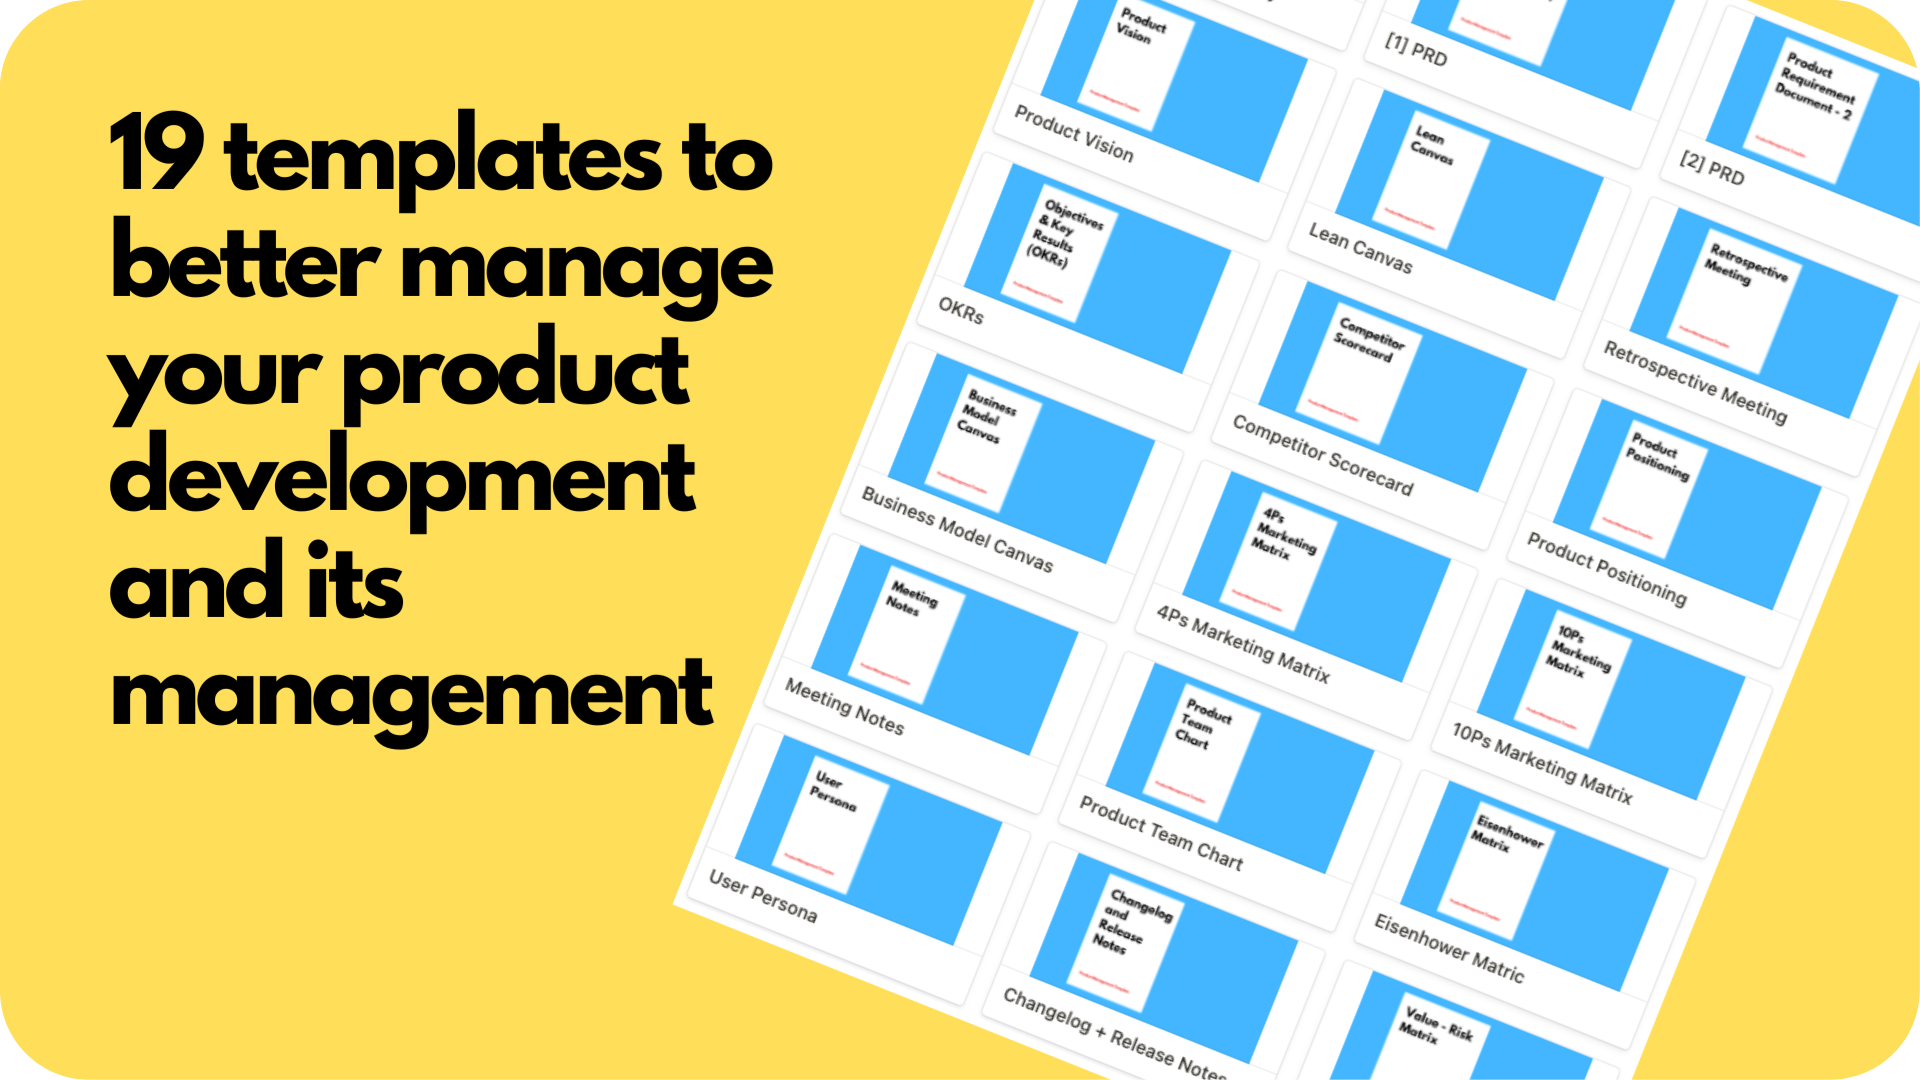 Product Management Templates